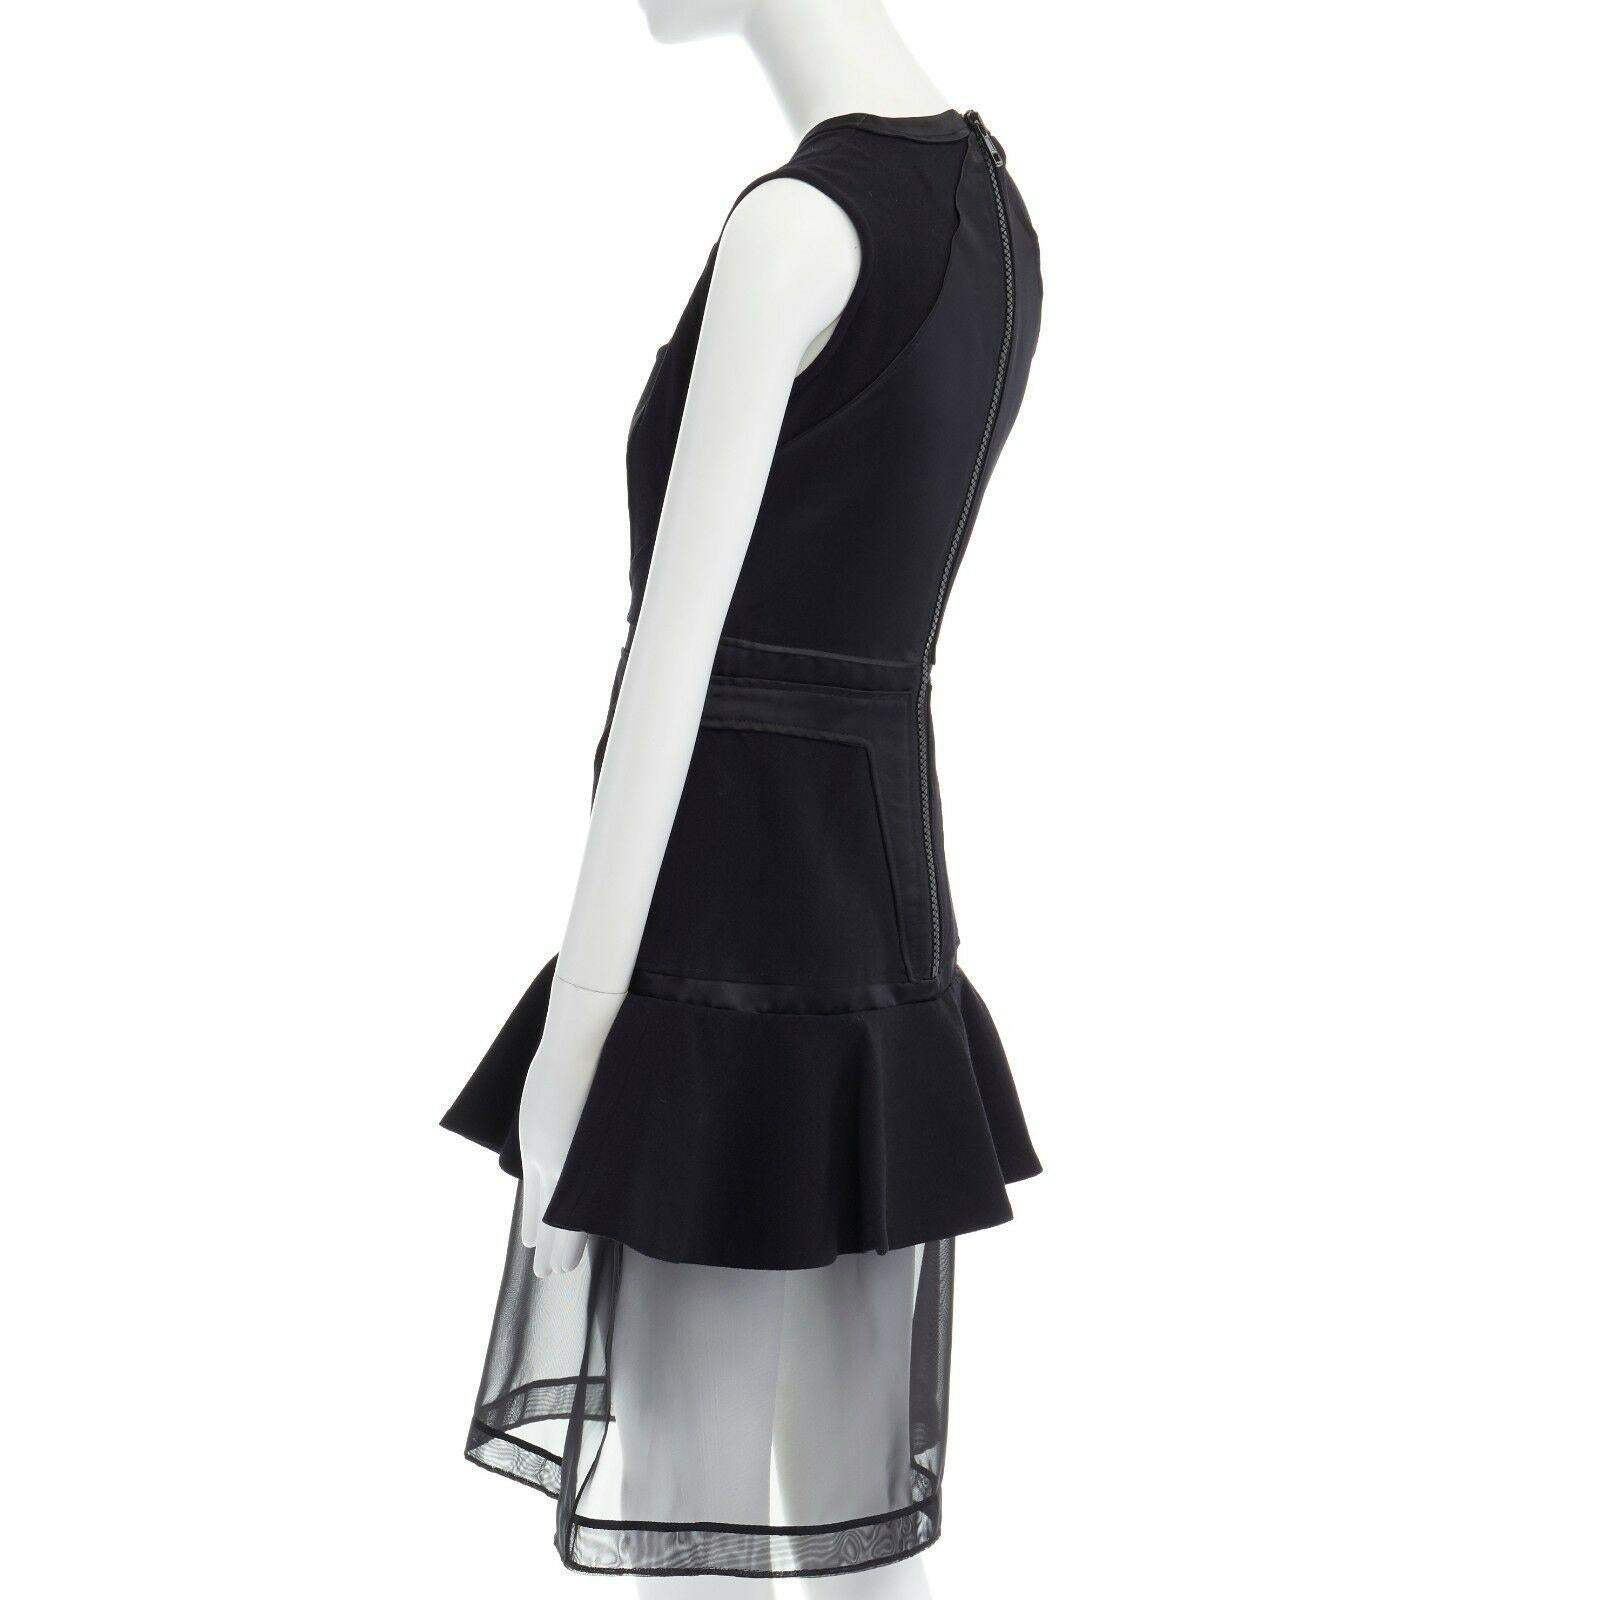 GIVENCHY TISCI 2011 black angular patched sheer skirt layer dress FR38 M 3